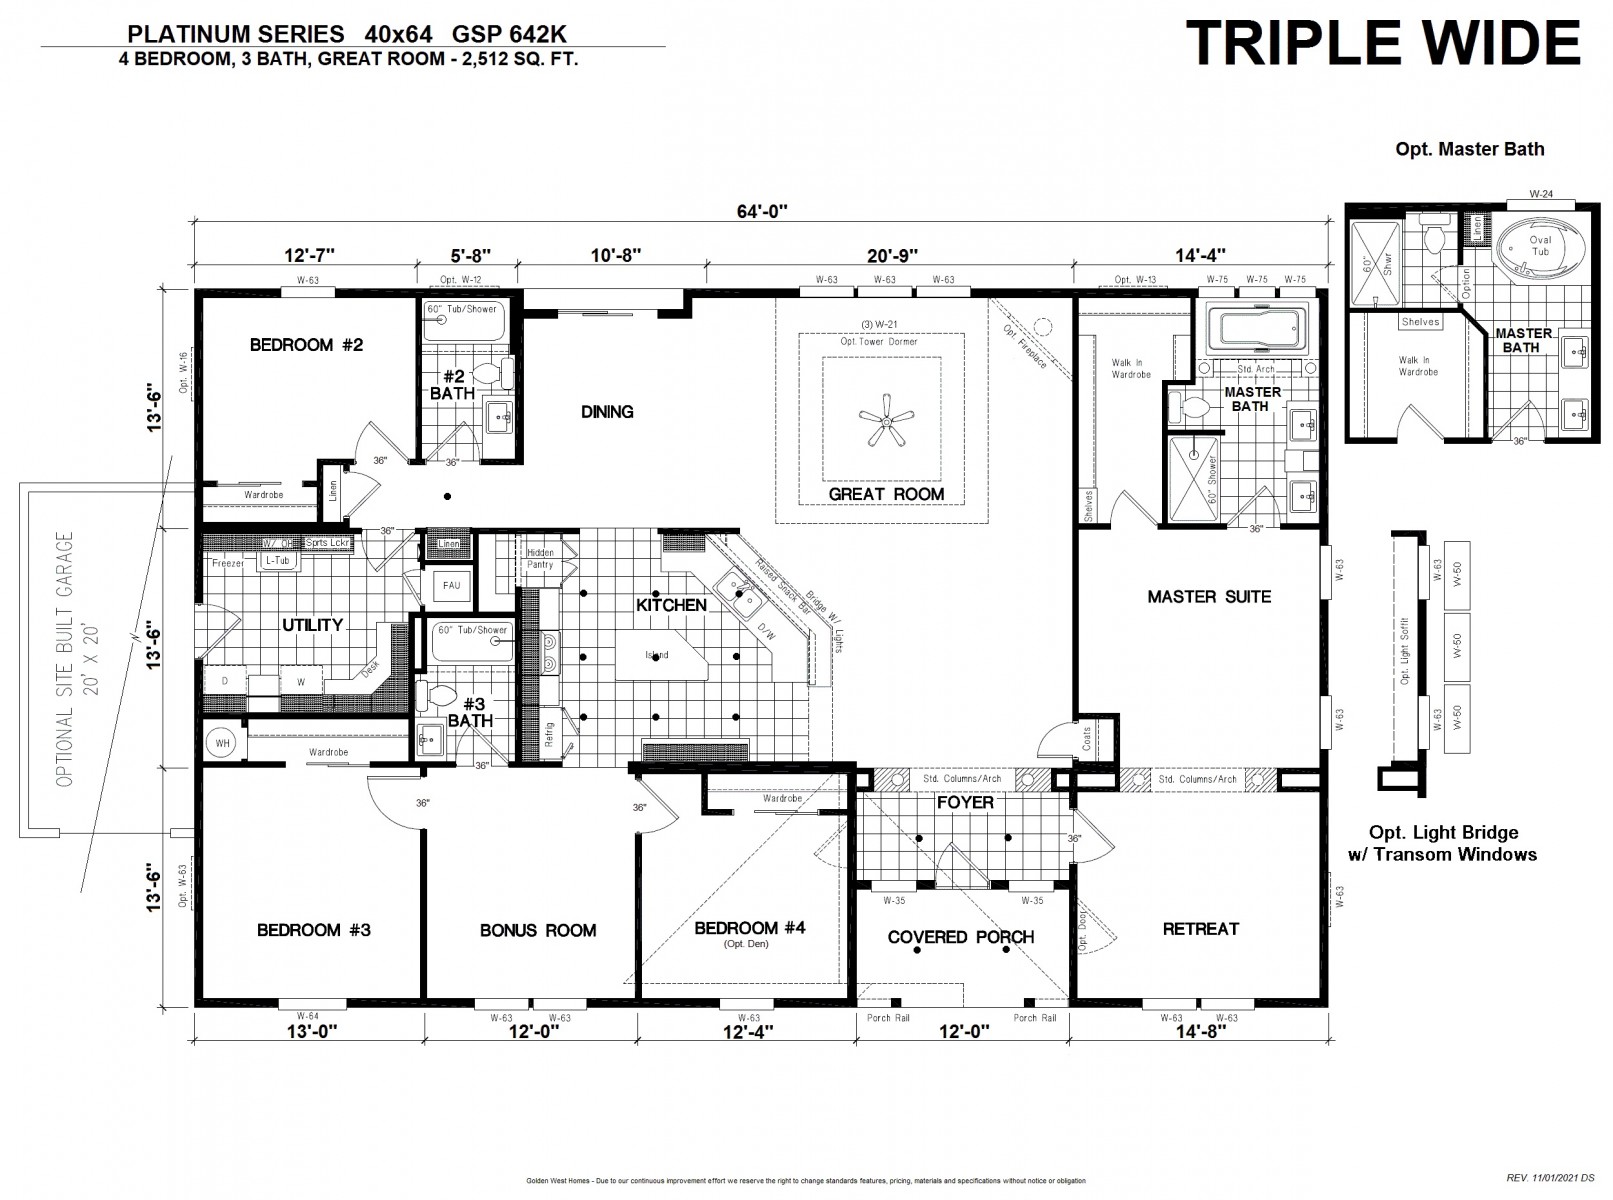 Homes Direct Modular Homes - Model GSP642K - Floorplan